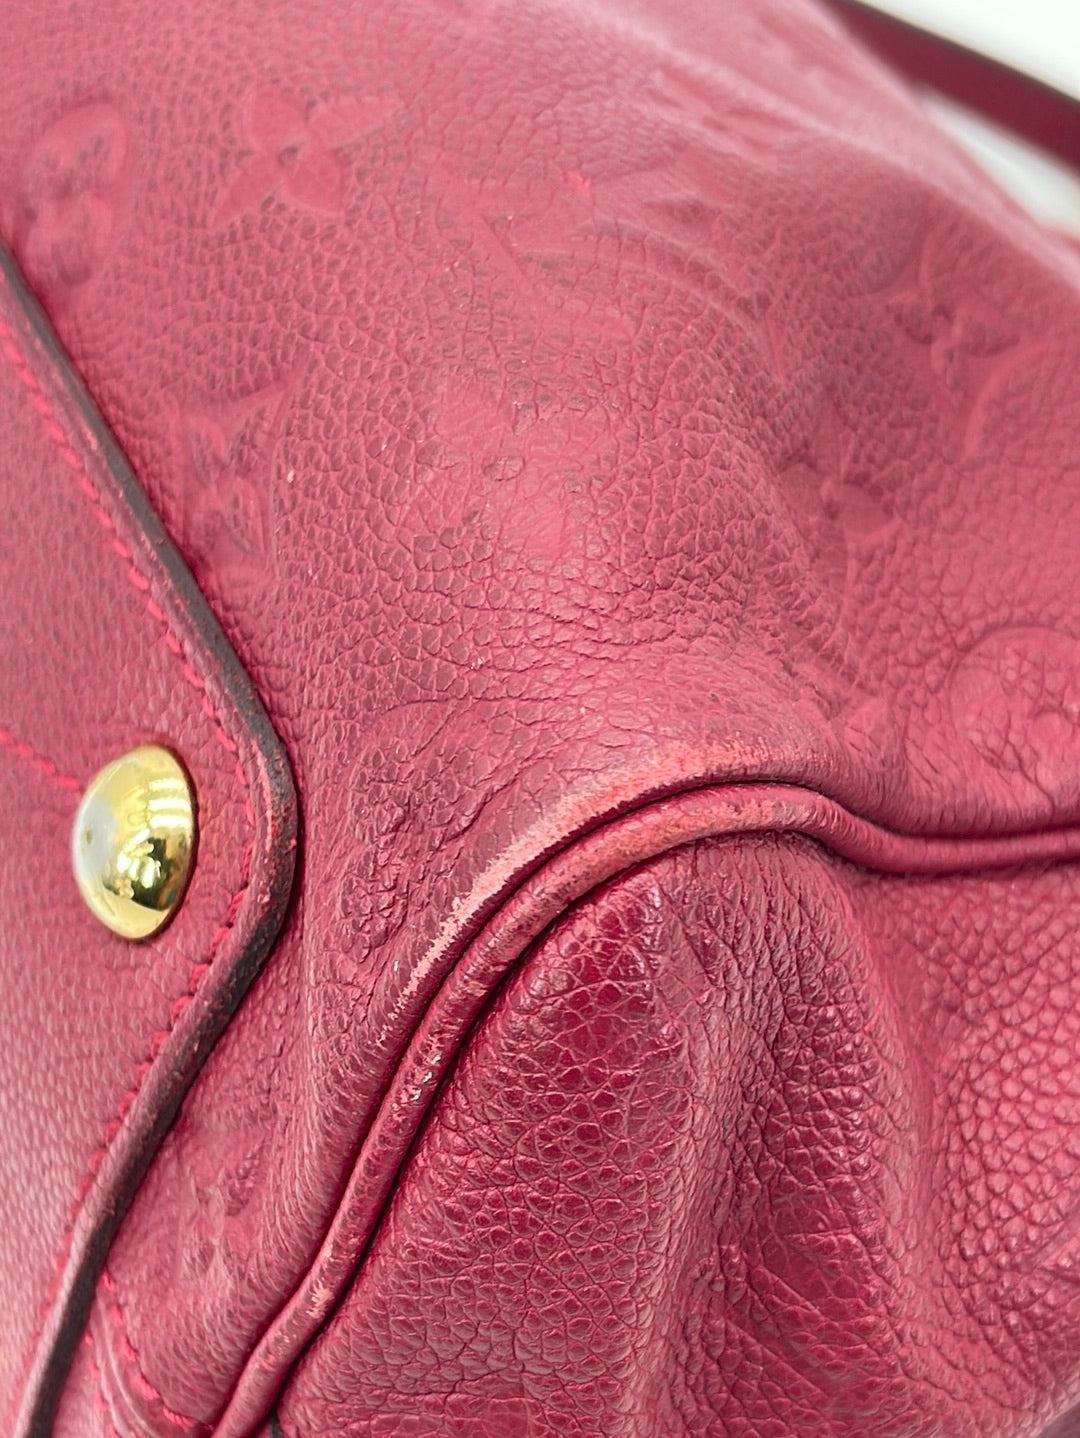 PRELOVED Louis Vuitton Speedy 25 Red Empriente Leather Bandolier Bag SP2103 051823 $500 OFF